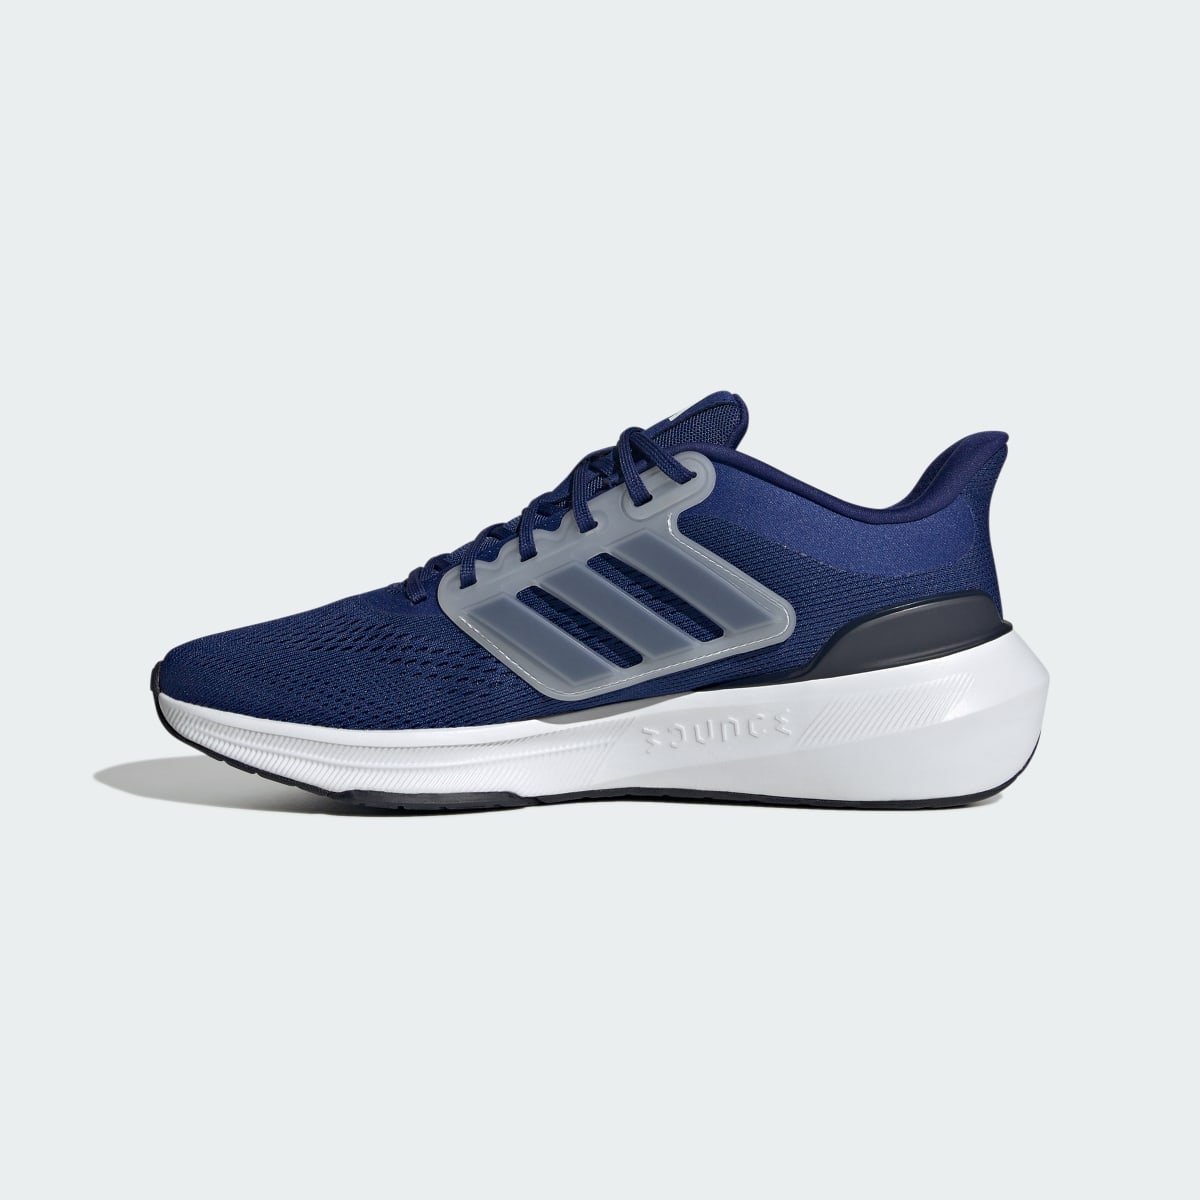 Adidas Ultrabounce Running Shoes. 7